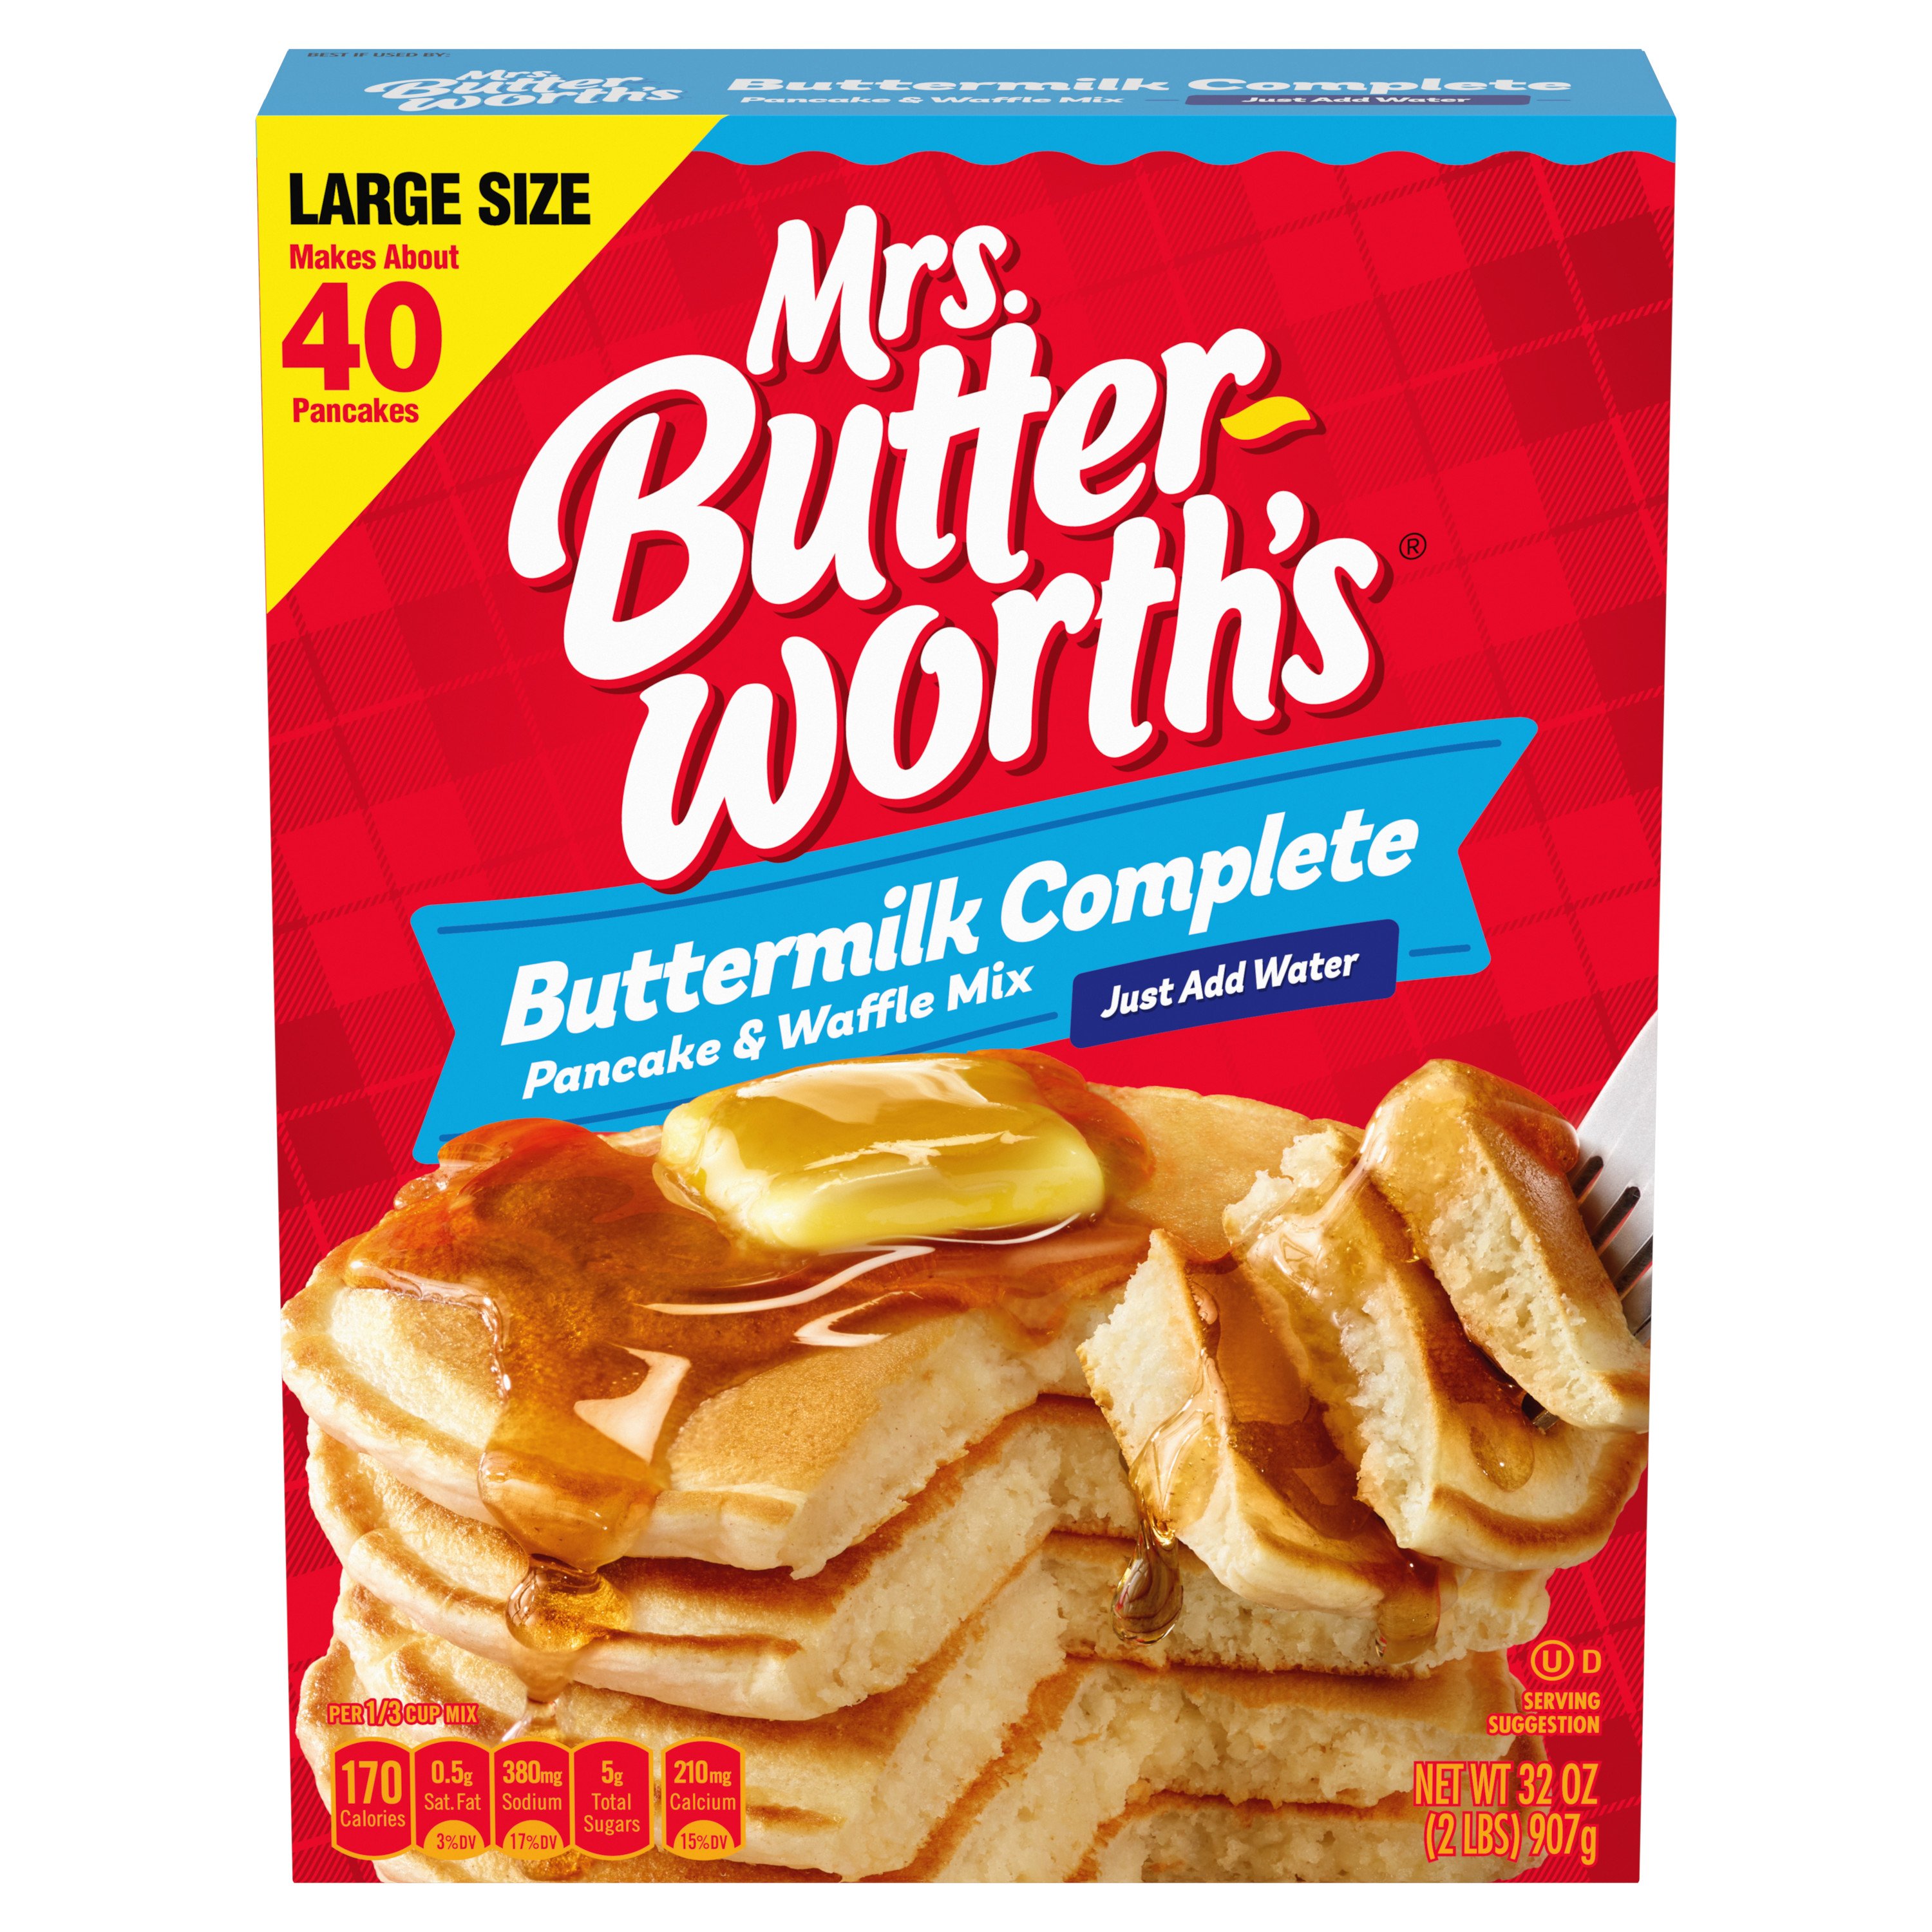 Mrs. Butterworth's Complete Pancake & Waffle Mix - Shop Mixes H-E-B